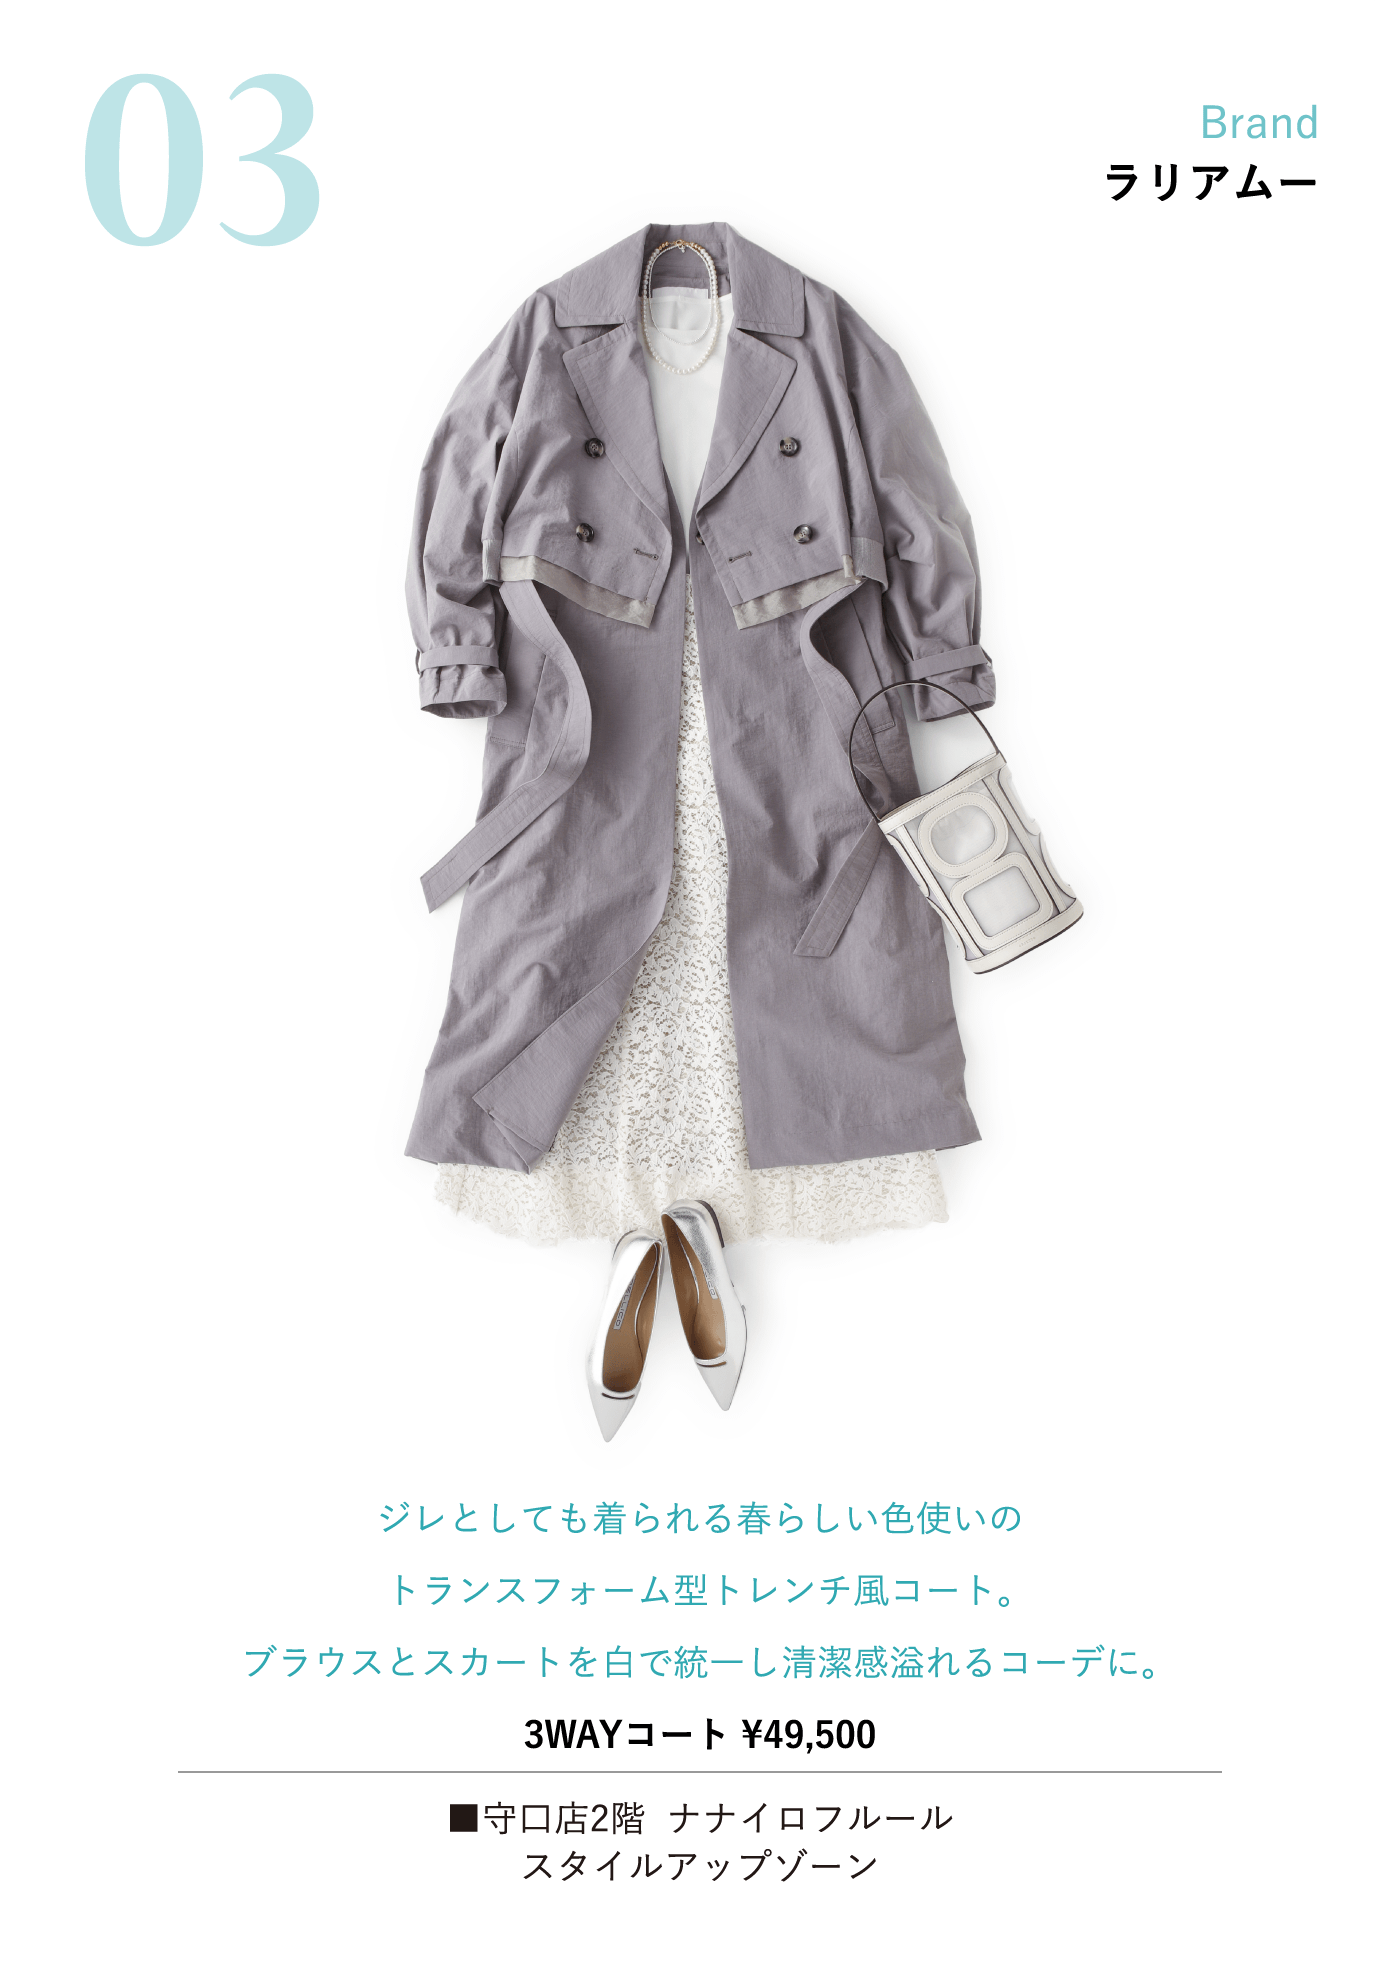 03「Brand: ラリアムー」ジレとしても着られる春らしい色使いのトランスフォーム型トレンチ風コート。ブラウスとスカートを白で統一し清潔感溢れるコーデに。3WAYコート ¥49,500